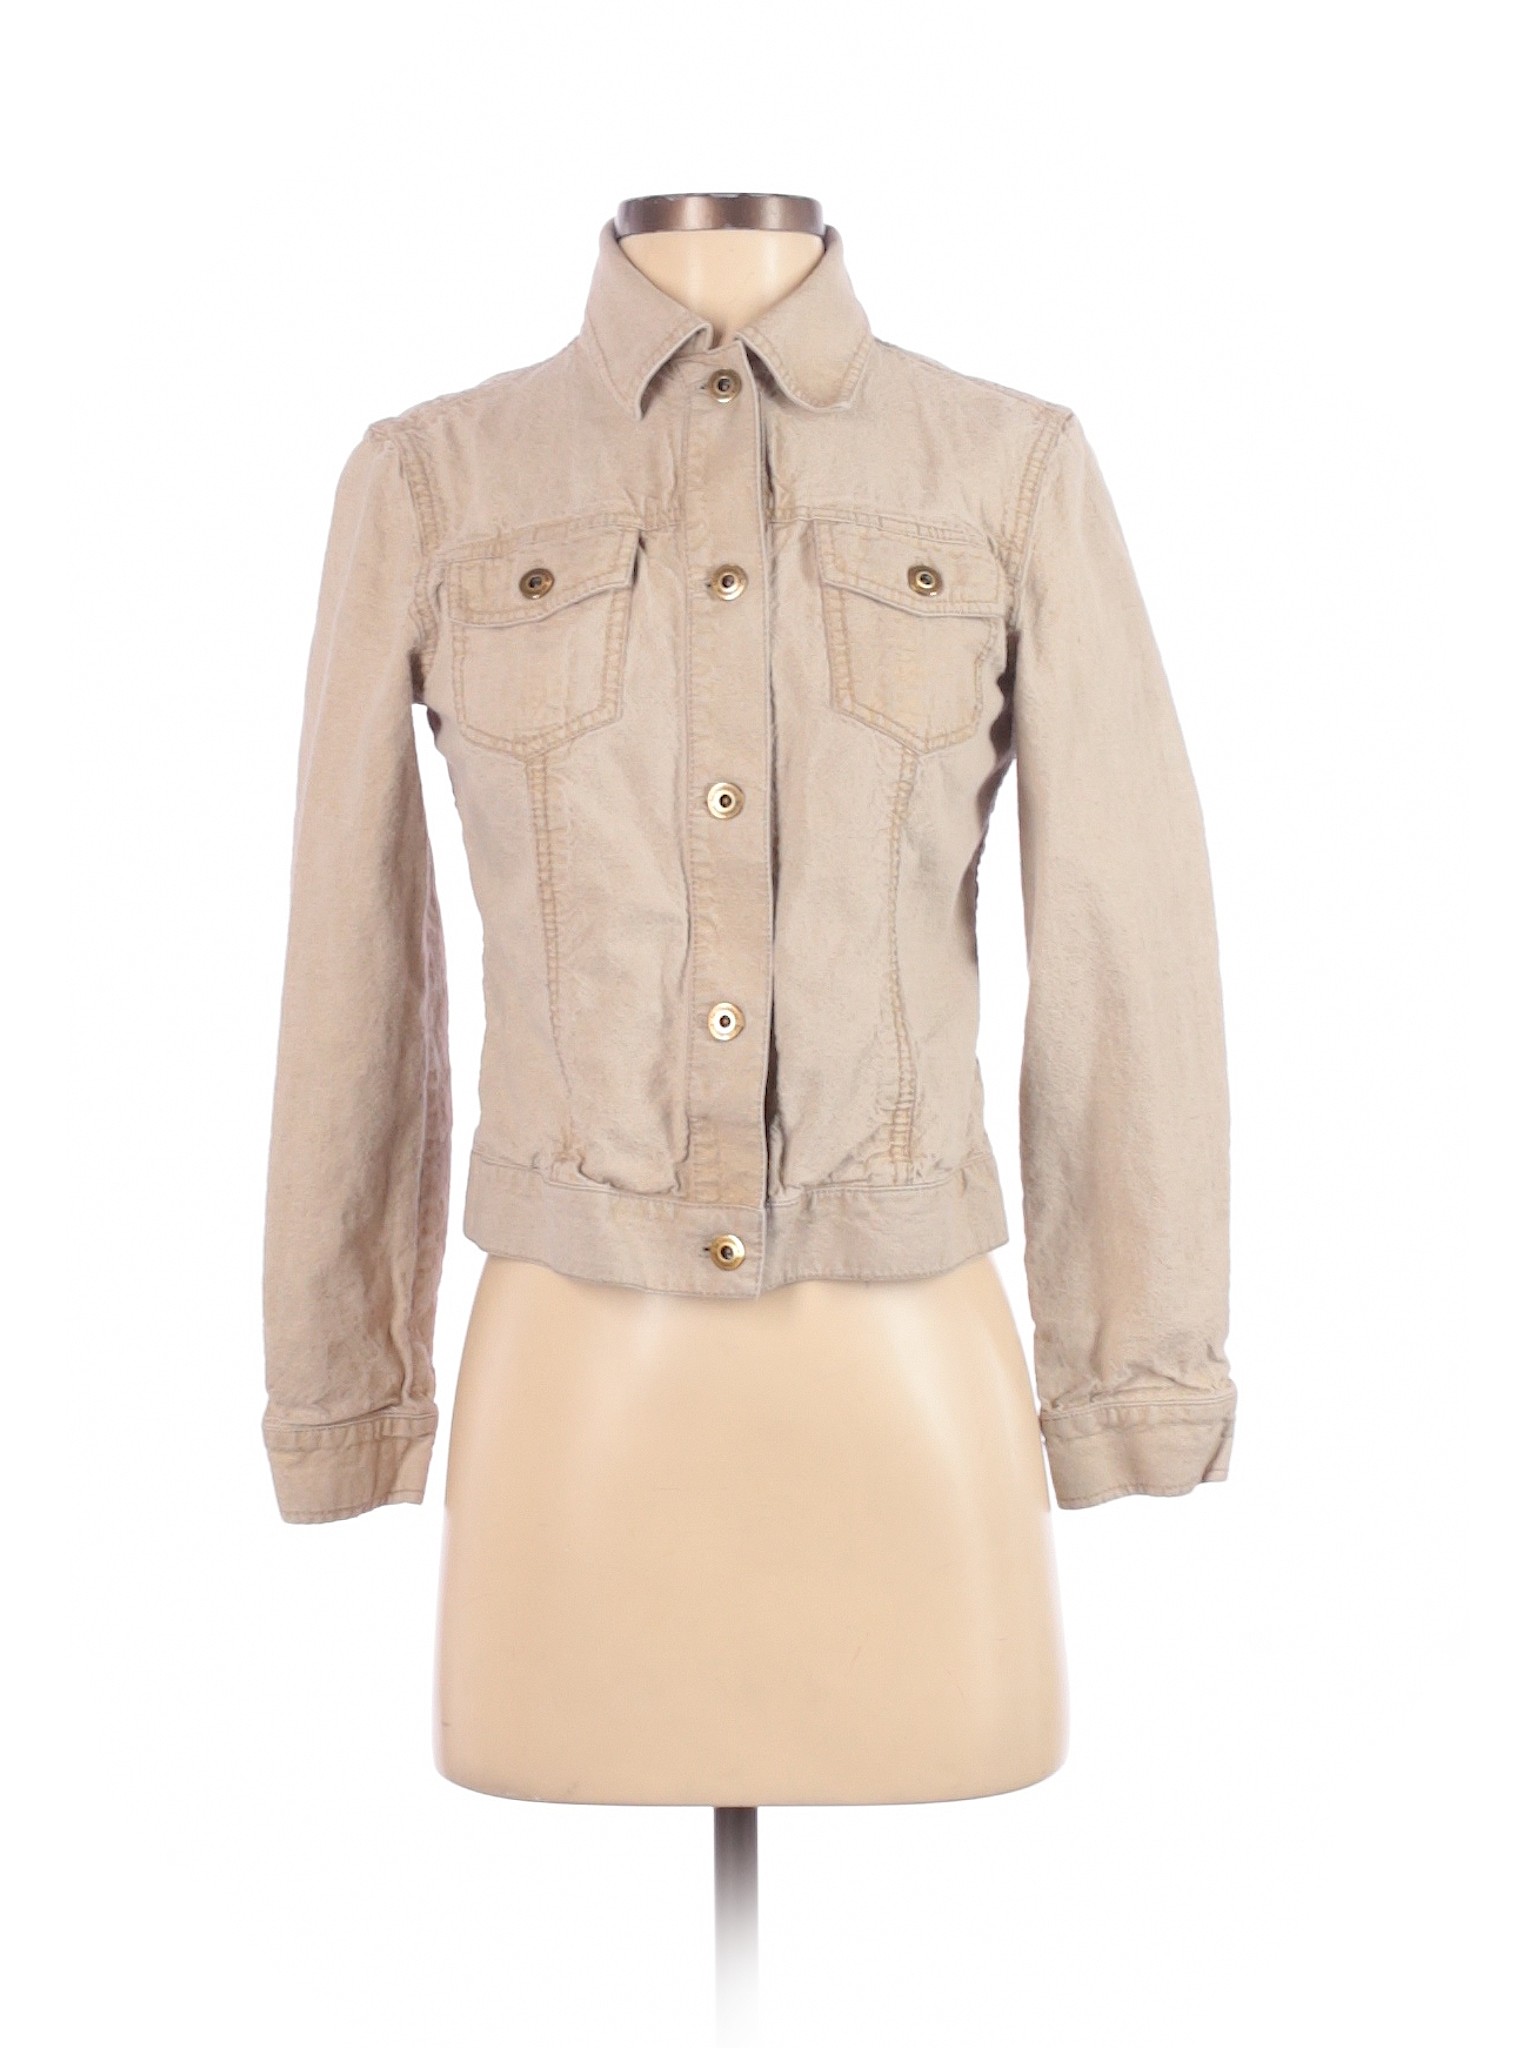 Liz Claiborne Women Brown Jacket S Petites | eBay